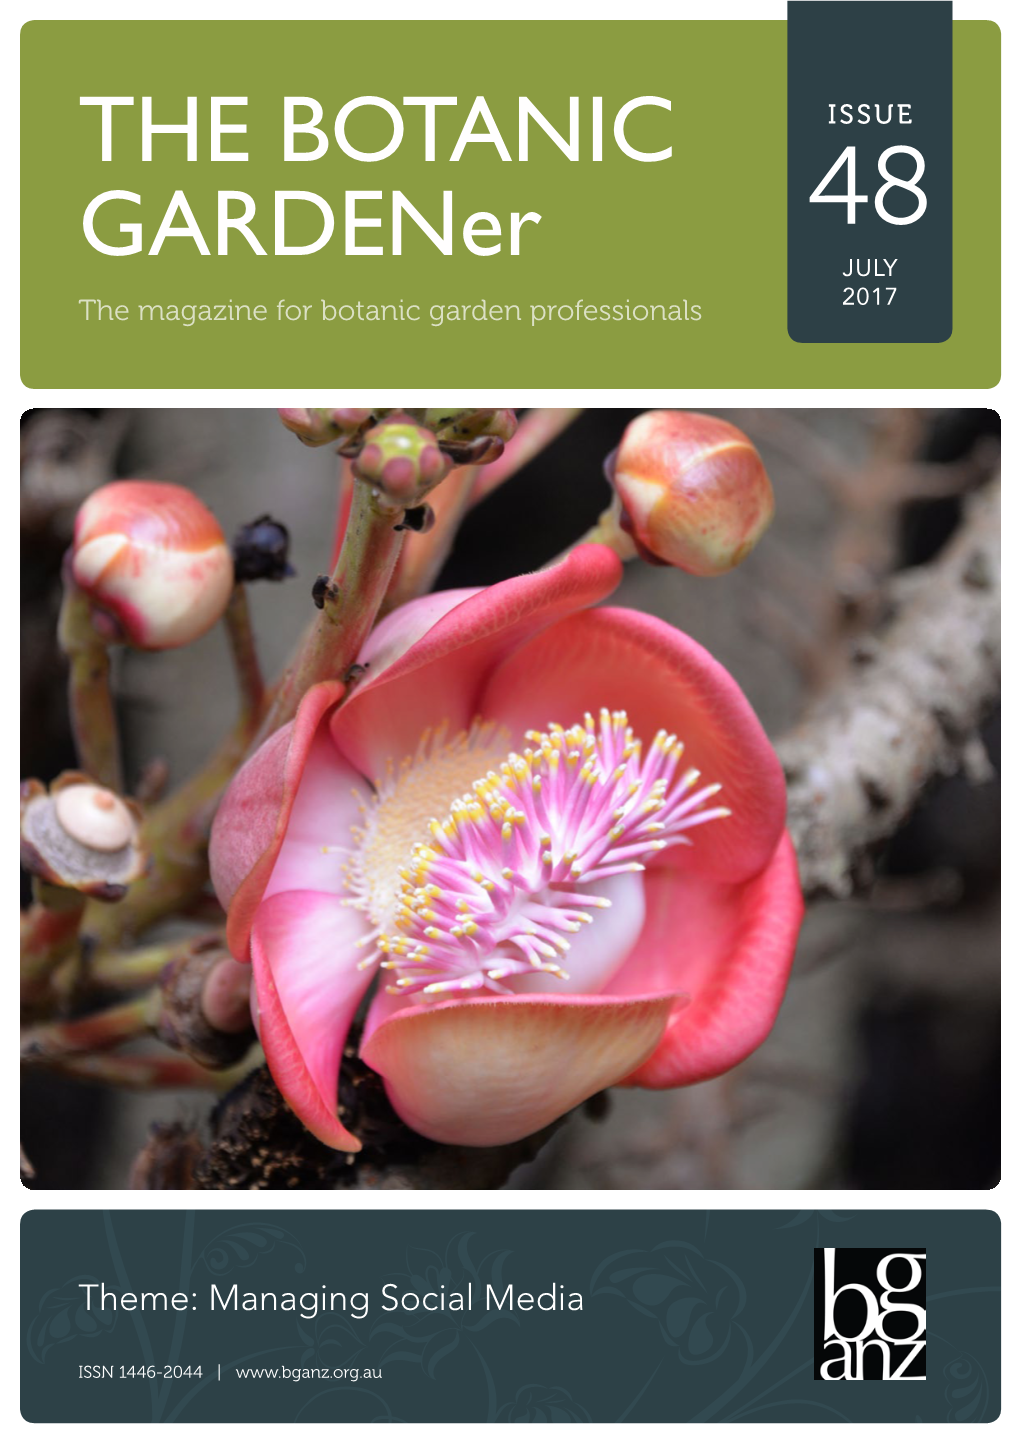 THE BOTANIC Gardener Issue 48 – July 2017